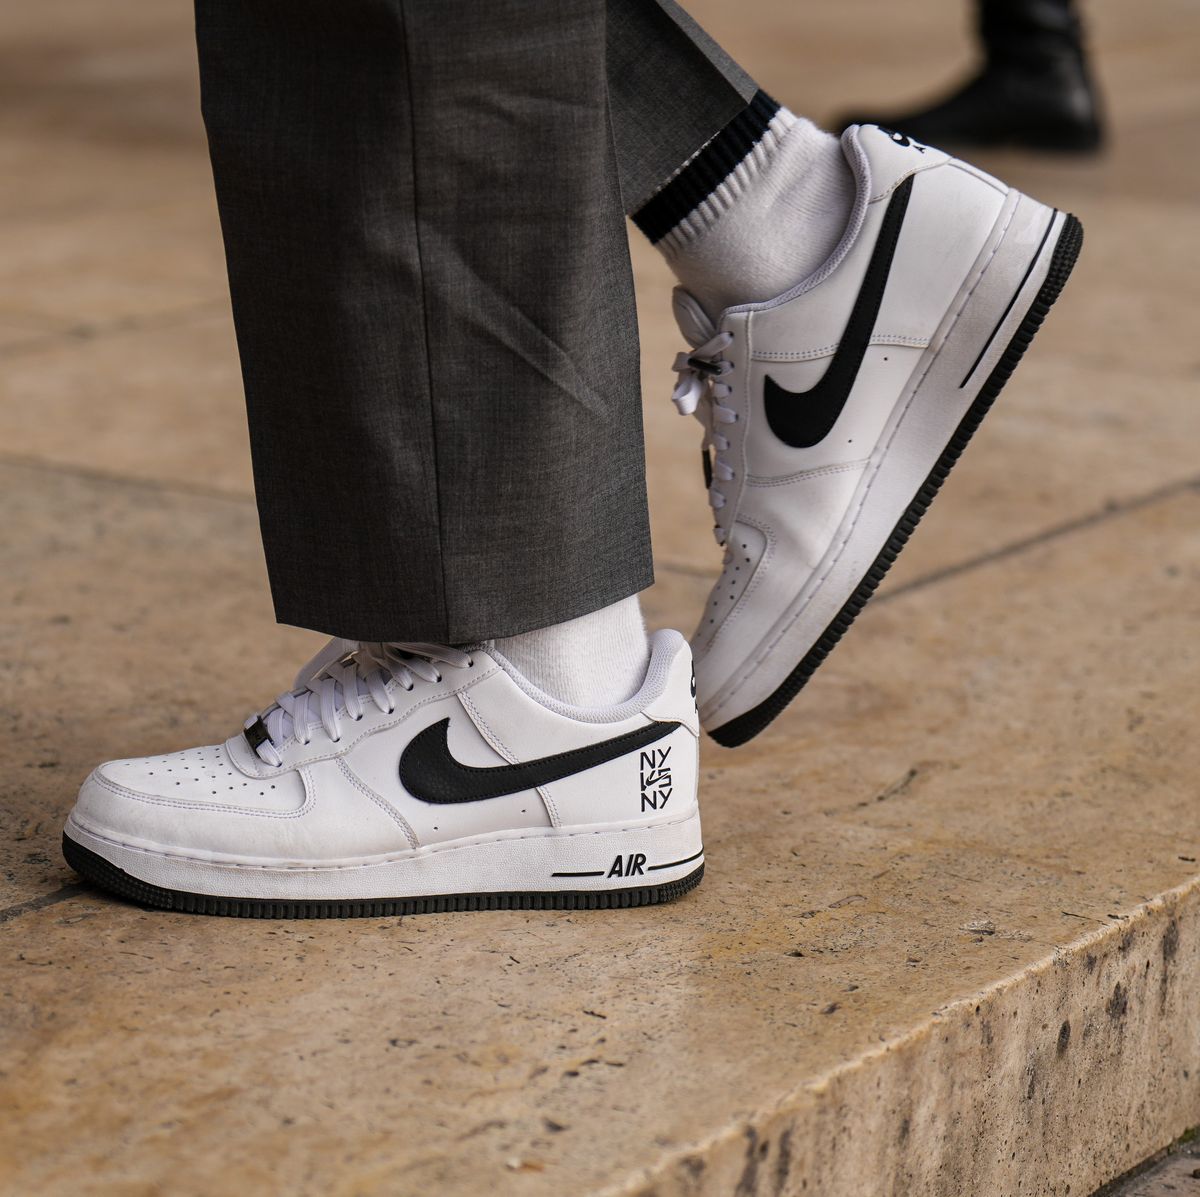 12 zapatillas Nike icónicas que debes conocer